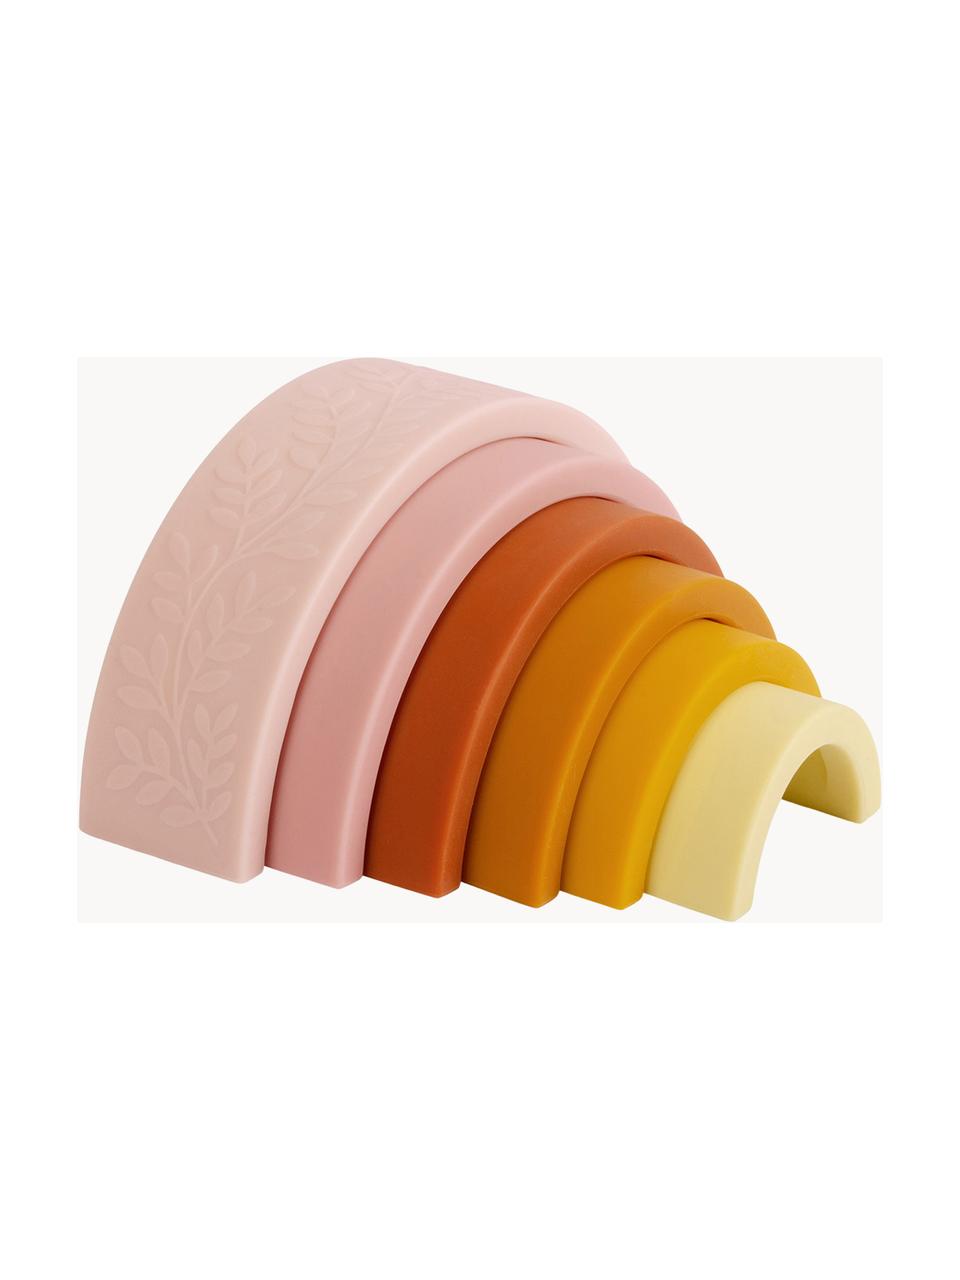 Juguete apilable Rainbow, Silicona, Tonos de rosa, amarillo y naranja, An 15 x Al 7 cm